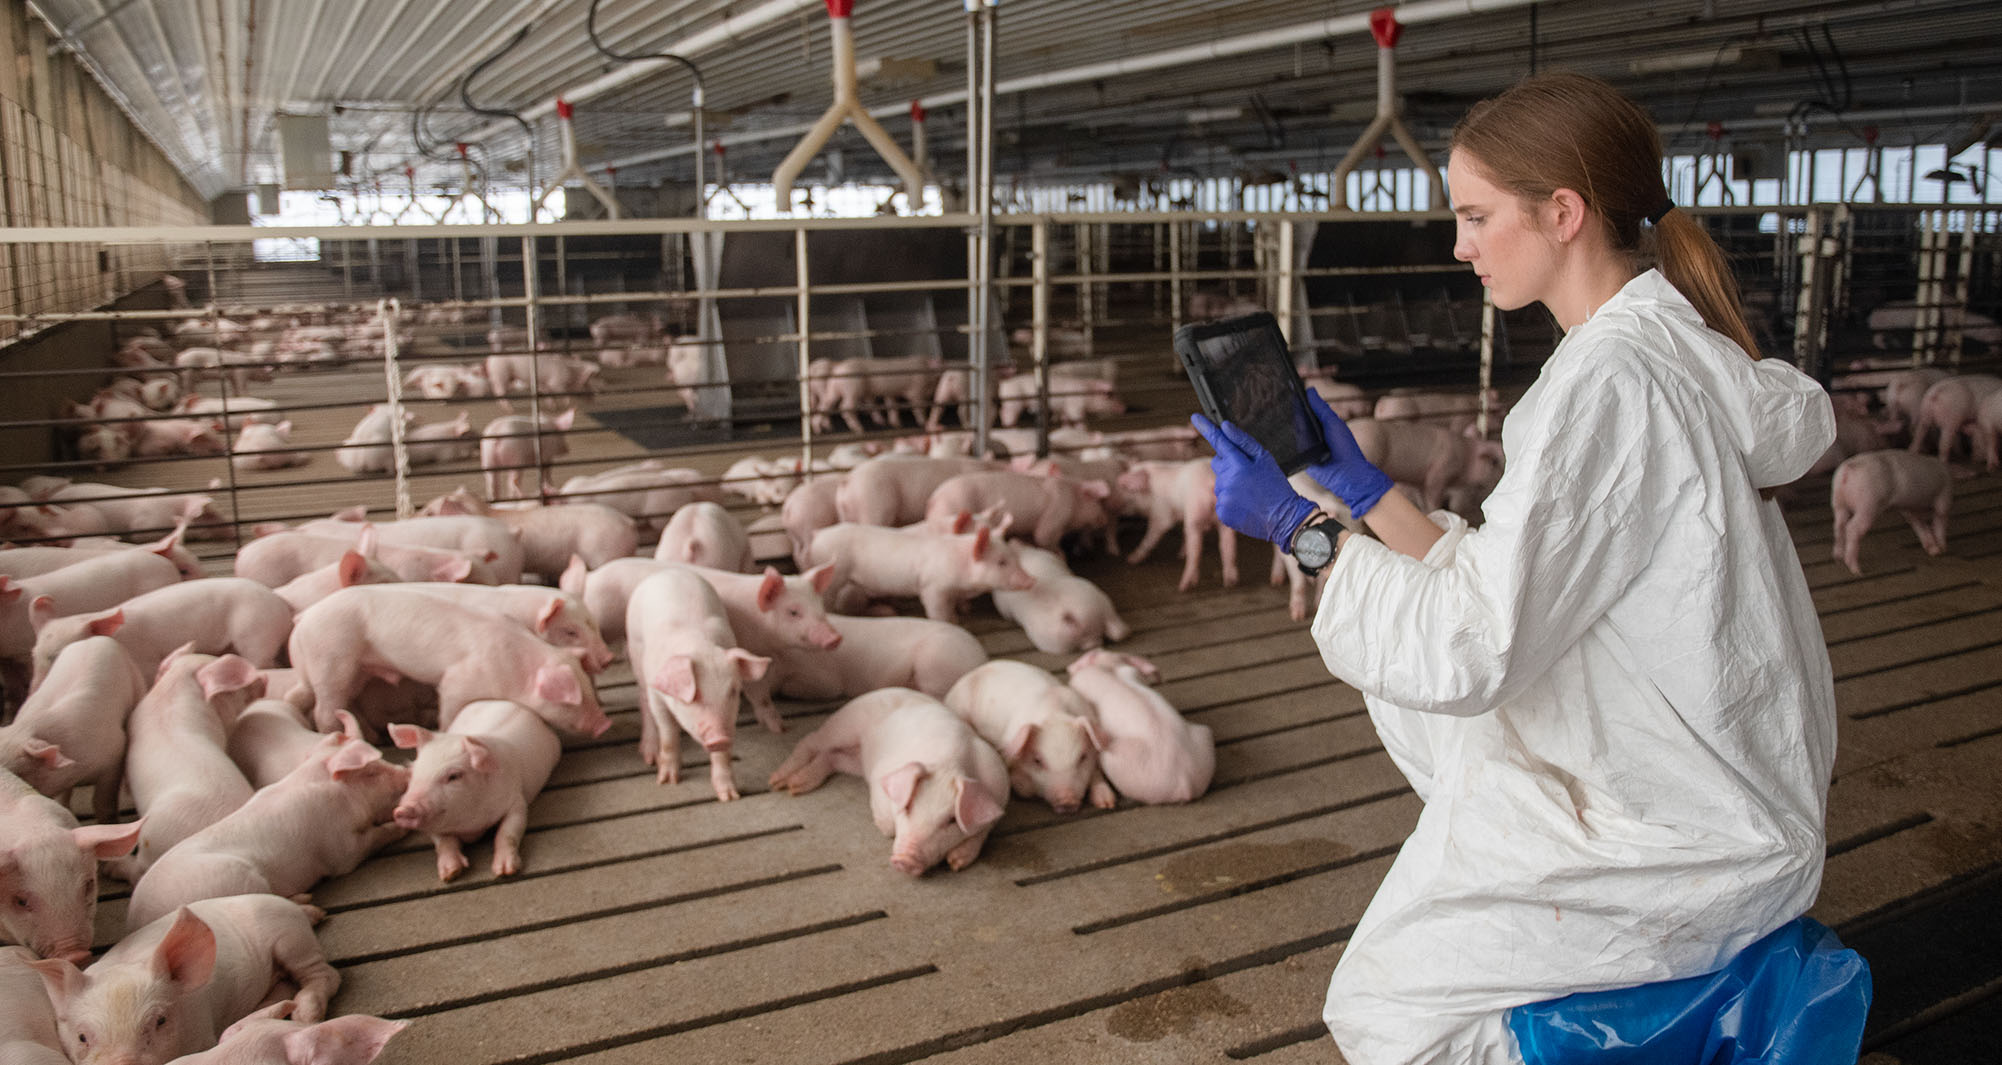 SMEC-student evaluating piglets